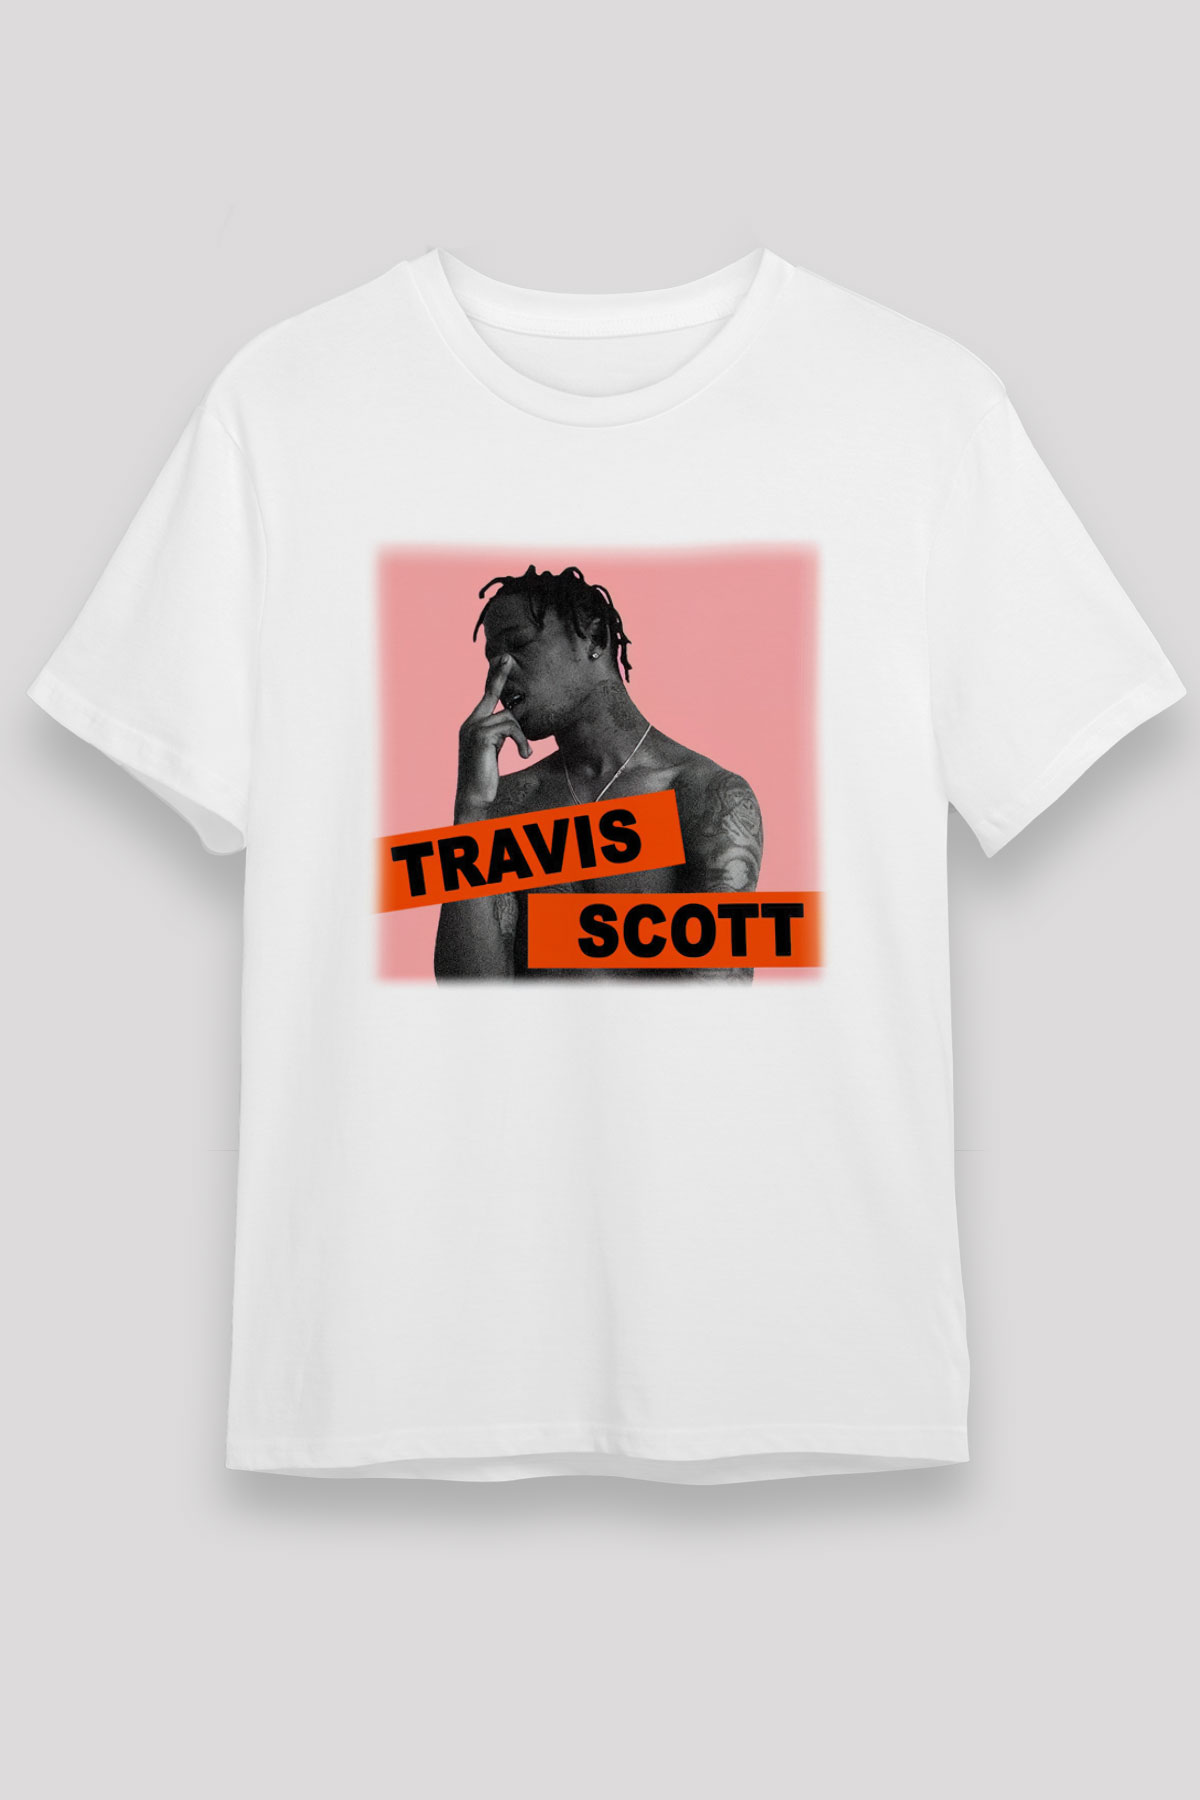 Travis Scott T shirt,Hip Hop,Rap Tshirt 16/